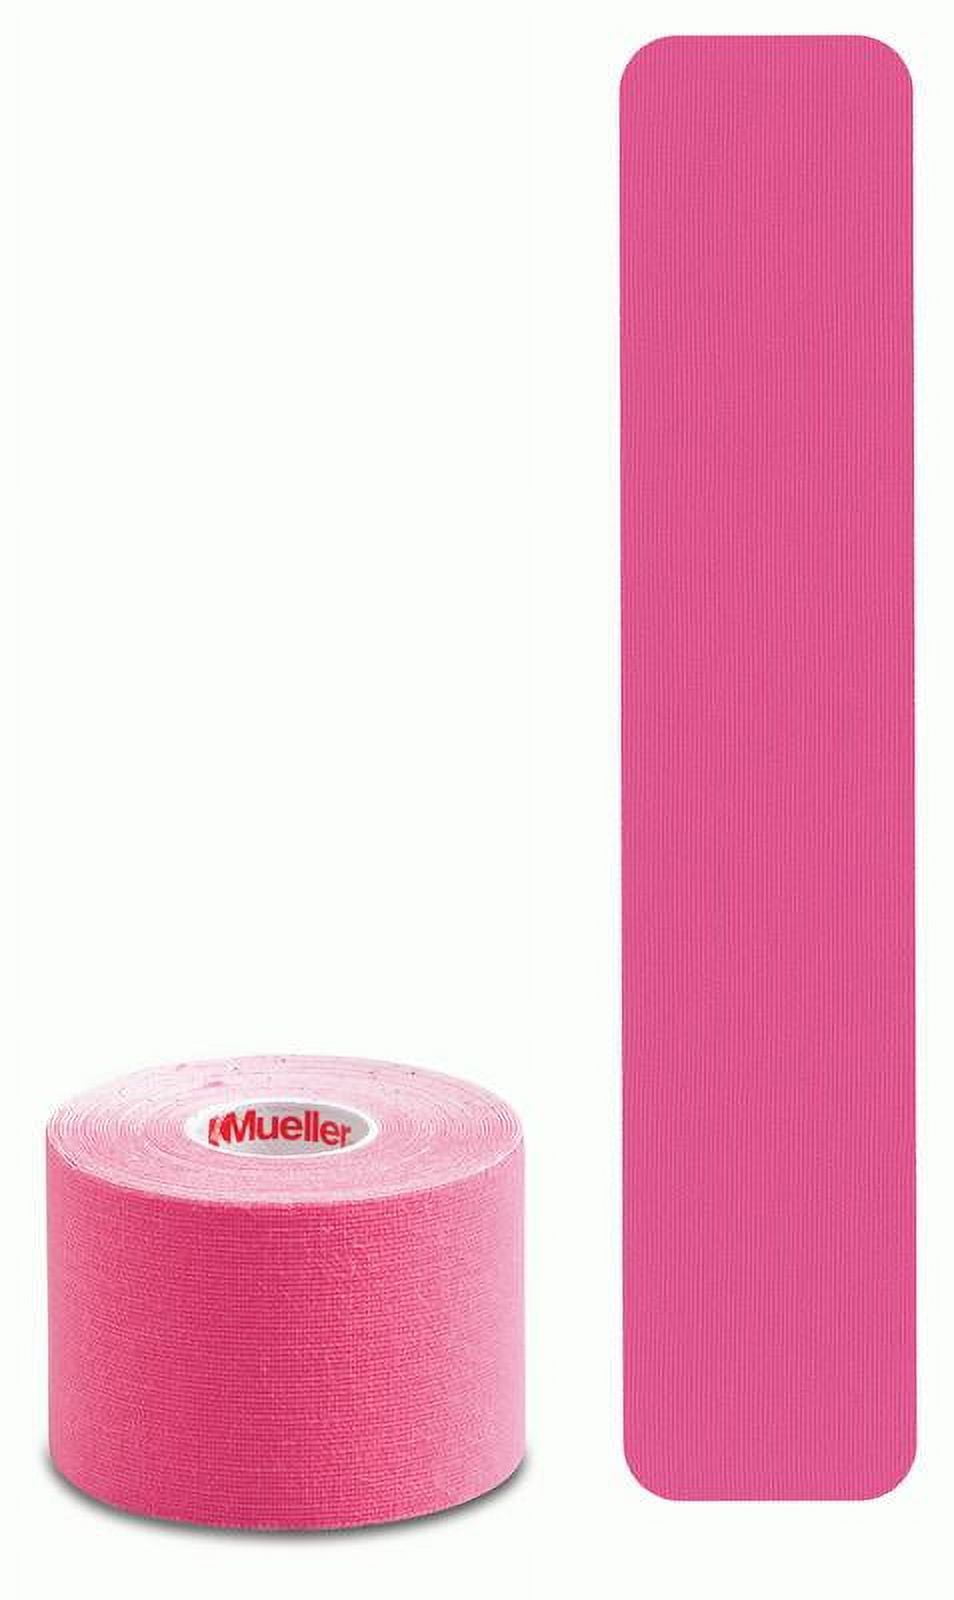 Mueller Kinesiology Tape, Precut I-Strip Roll (20 strips), Pink